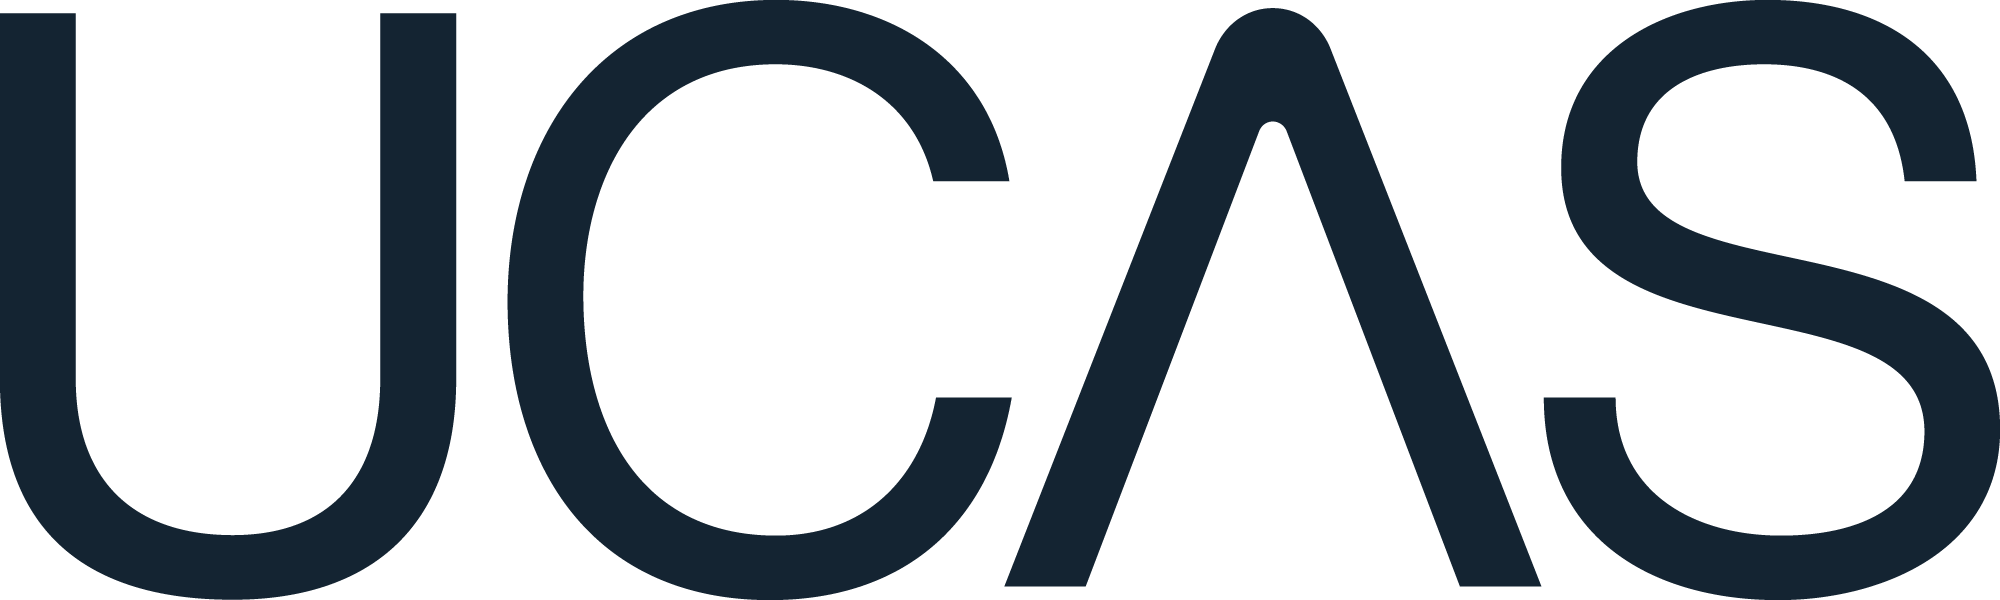 UCAS Logo - SLATE (002).png